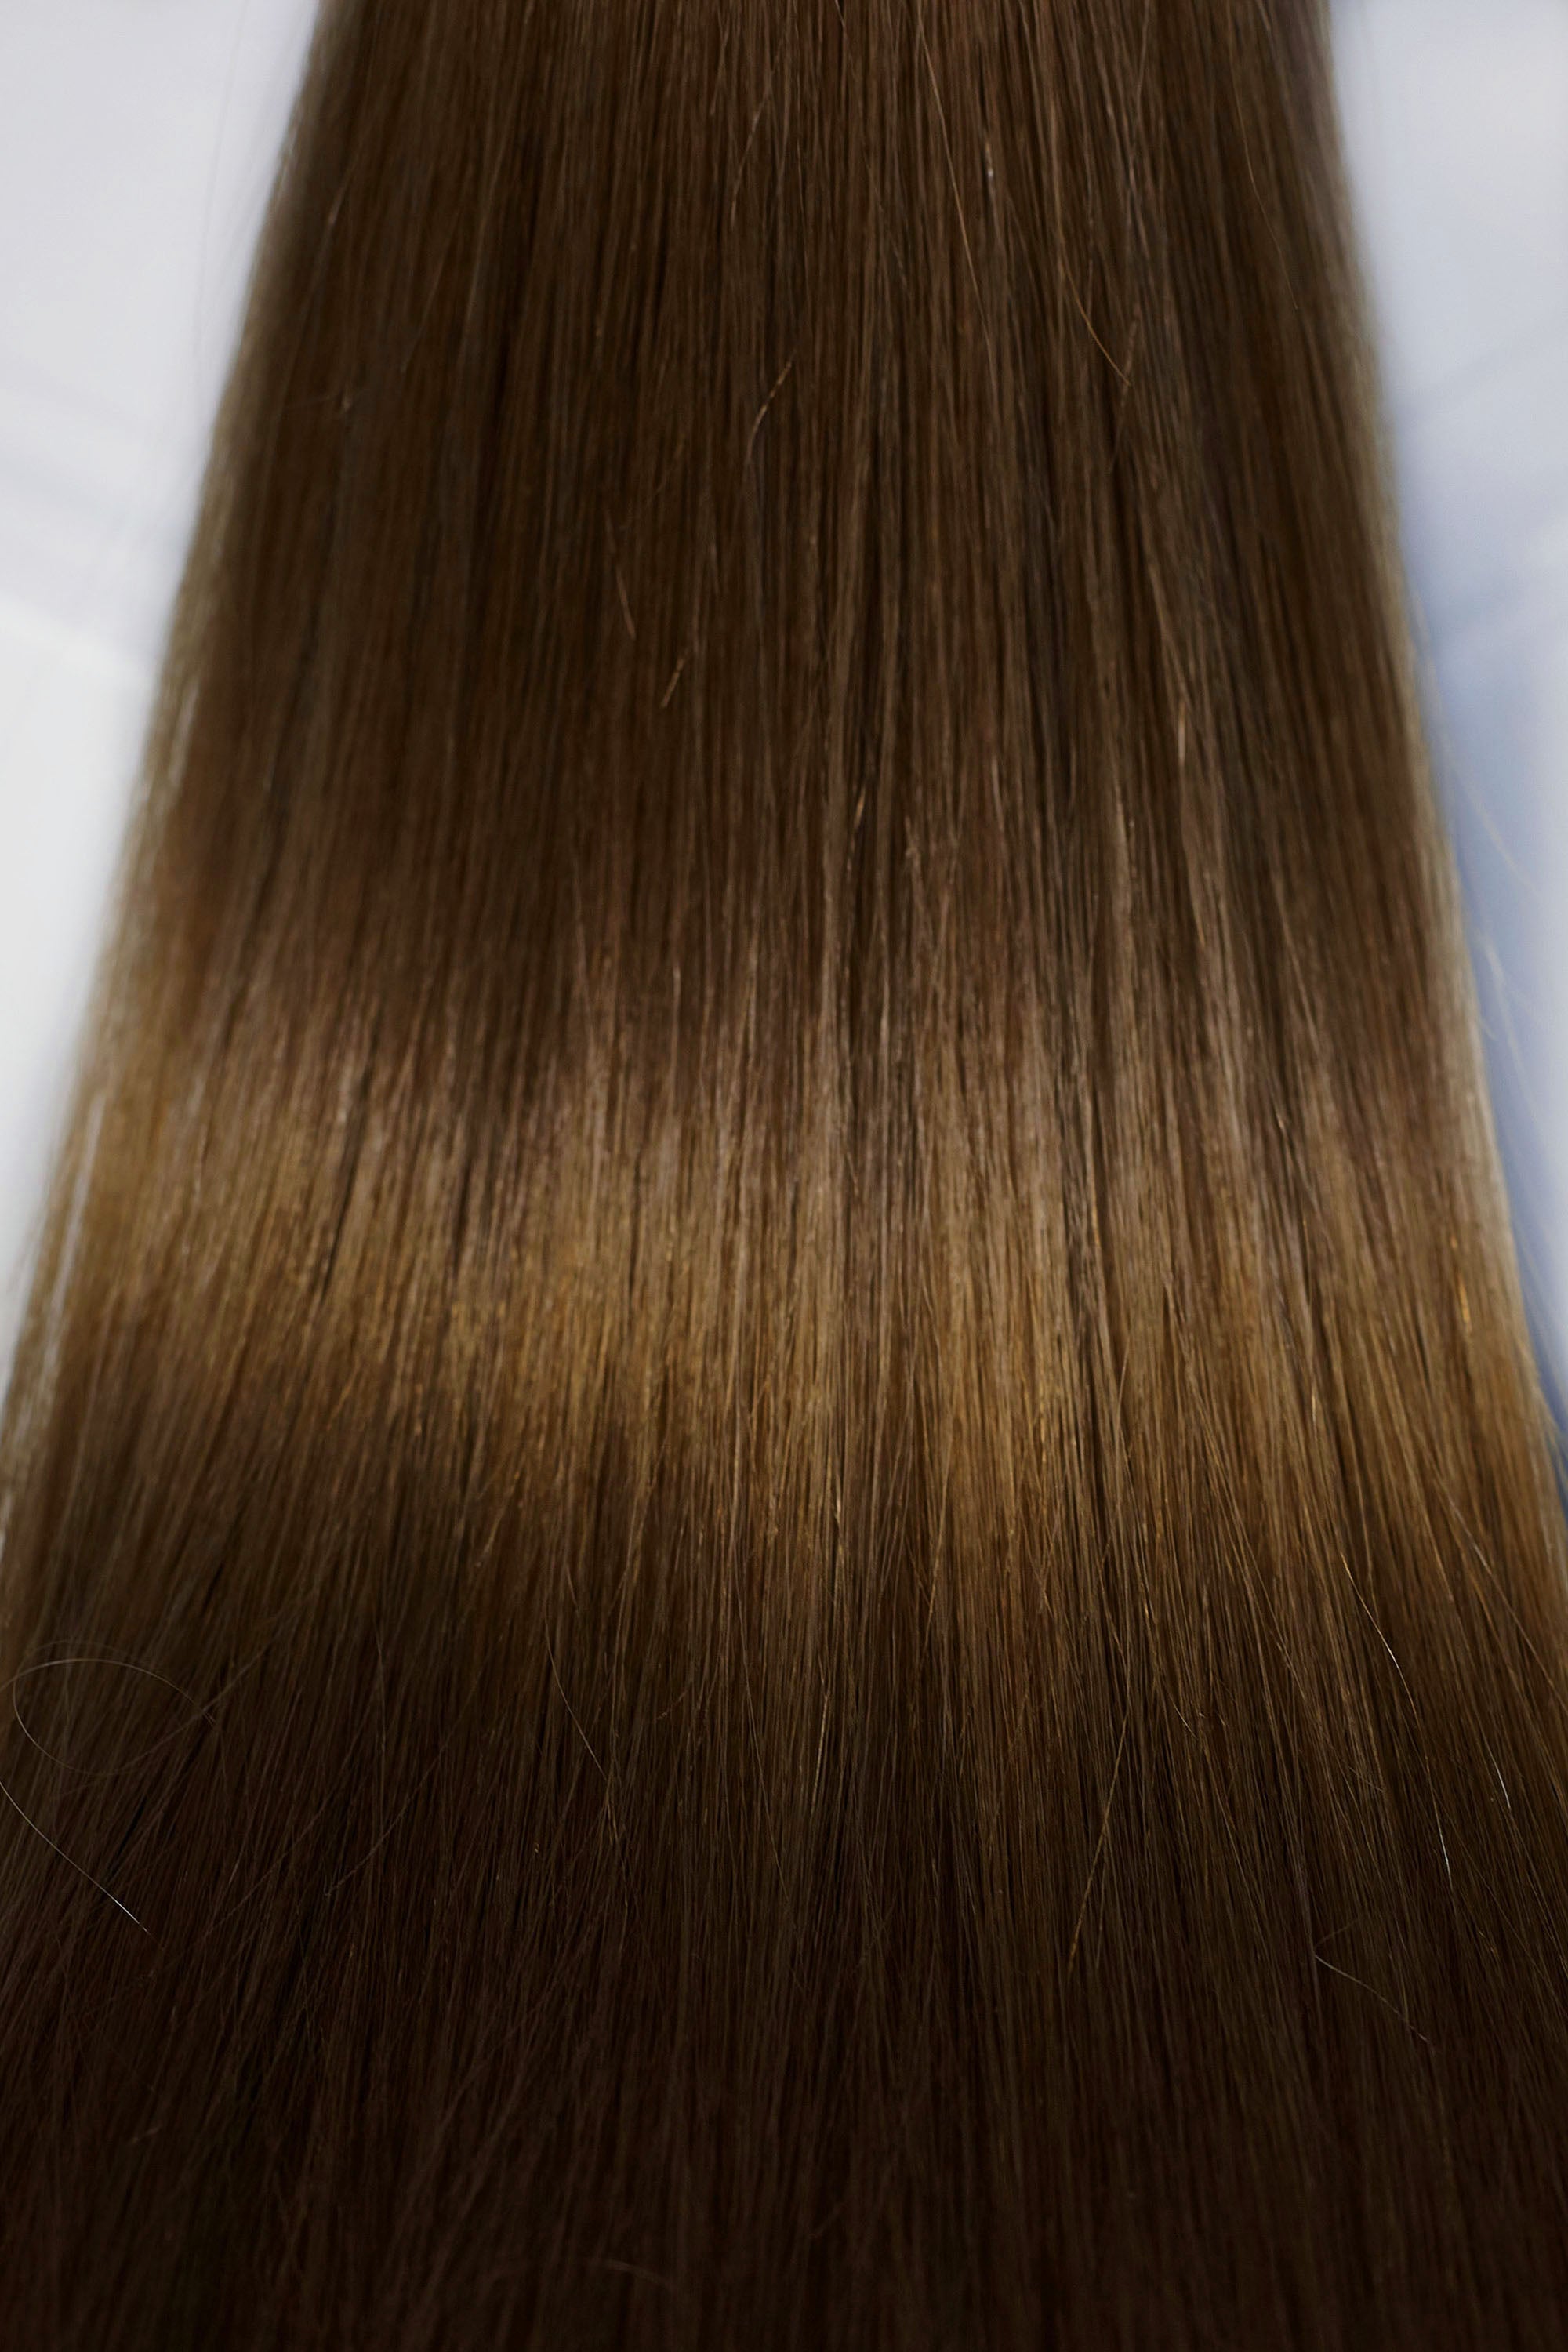 Behair professional Keratin Tip "Premium" 28" (70cm) Natural Straight Honey Walnut Brown #5 - 25g (Standart - 0.7g each pcs) hair extensions